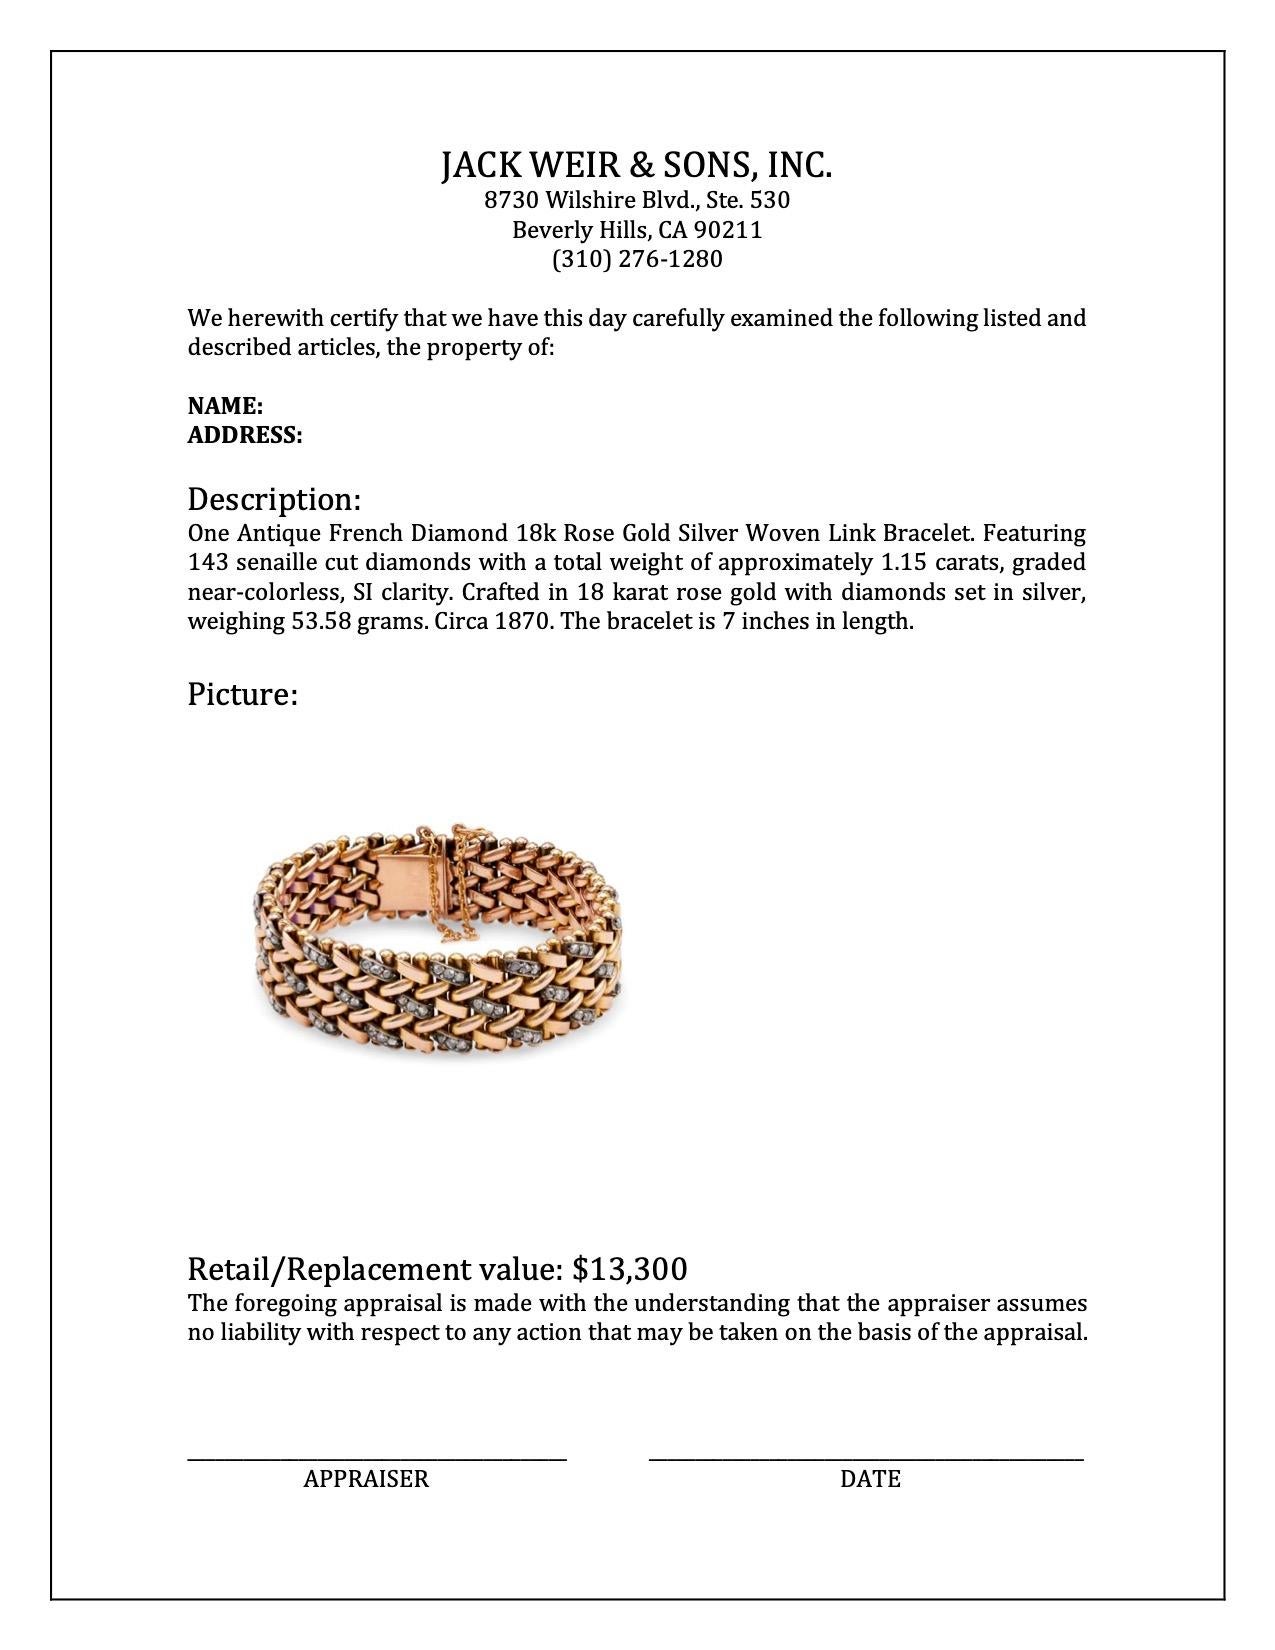 Women's or Men's Antique French Diamond 18k Rose Gold Silver Woven Link Bracelet For Sale